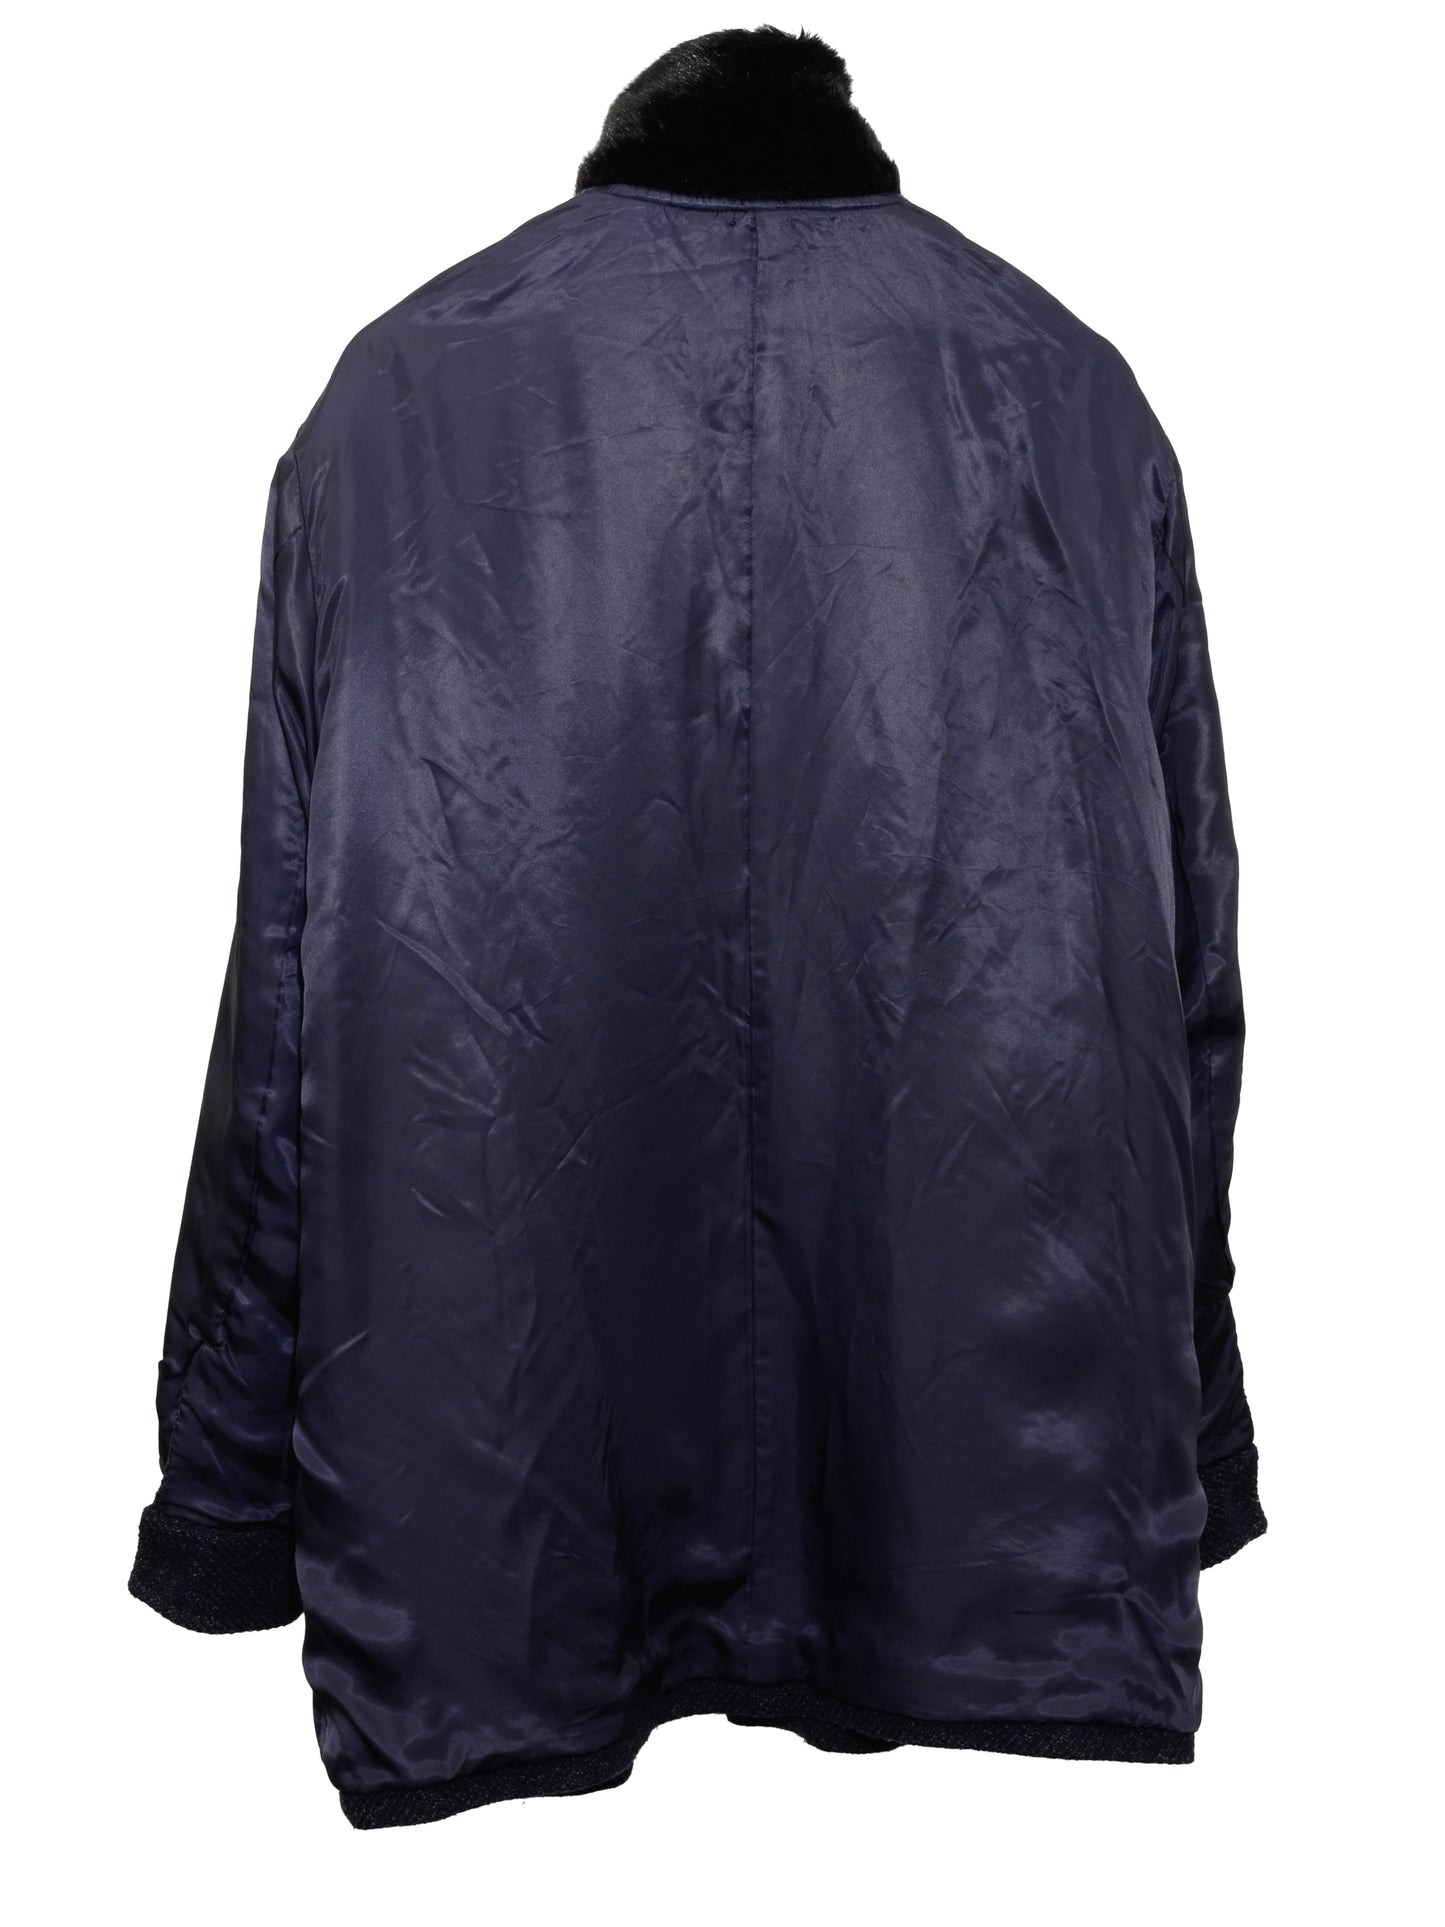 zip jacket navy ∙ wool nylon ∙ medium